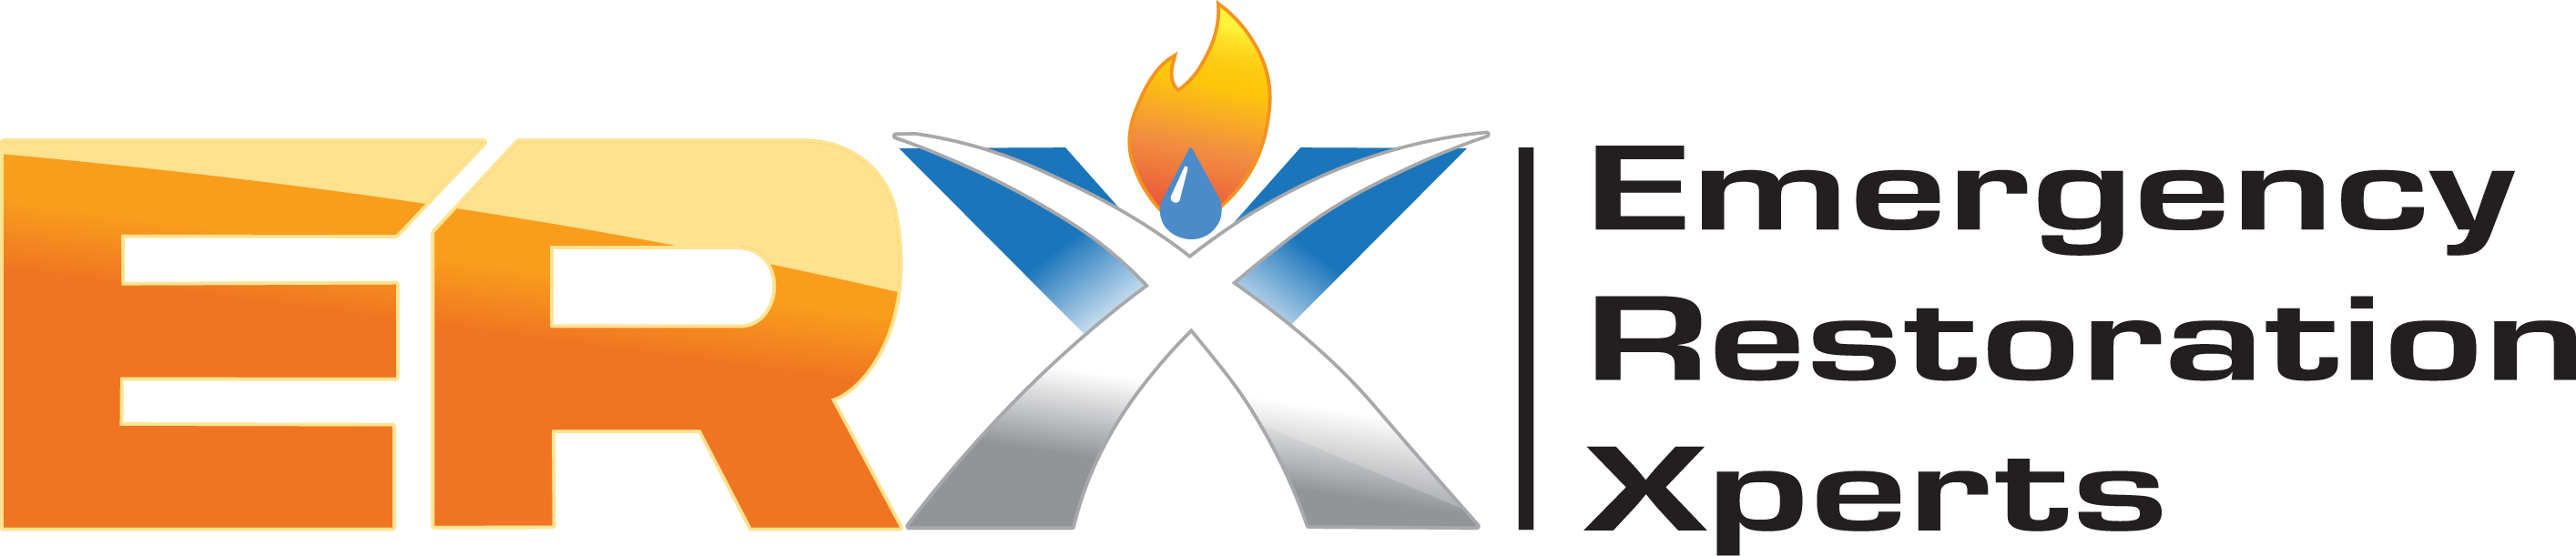 Emergency Restoration Xperts logo